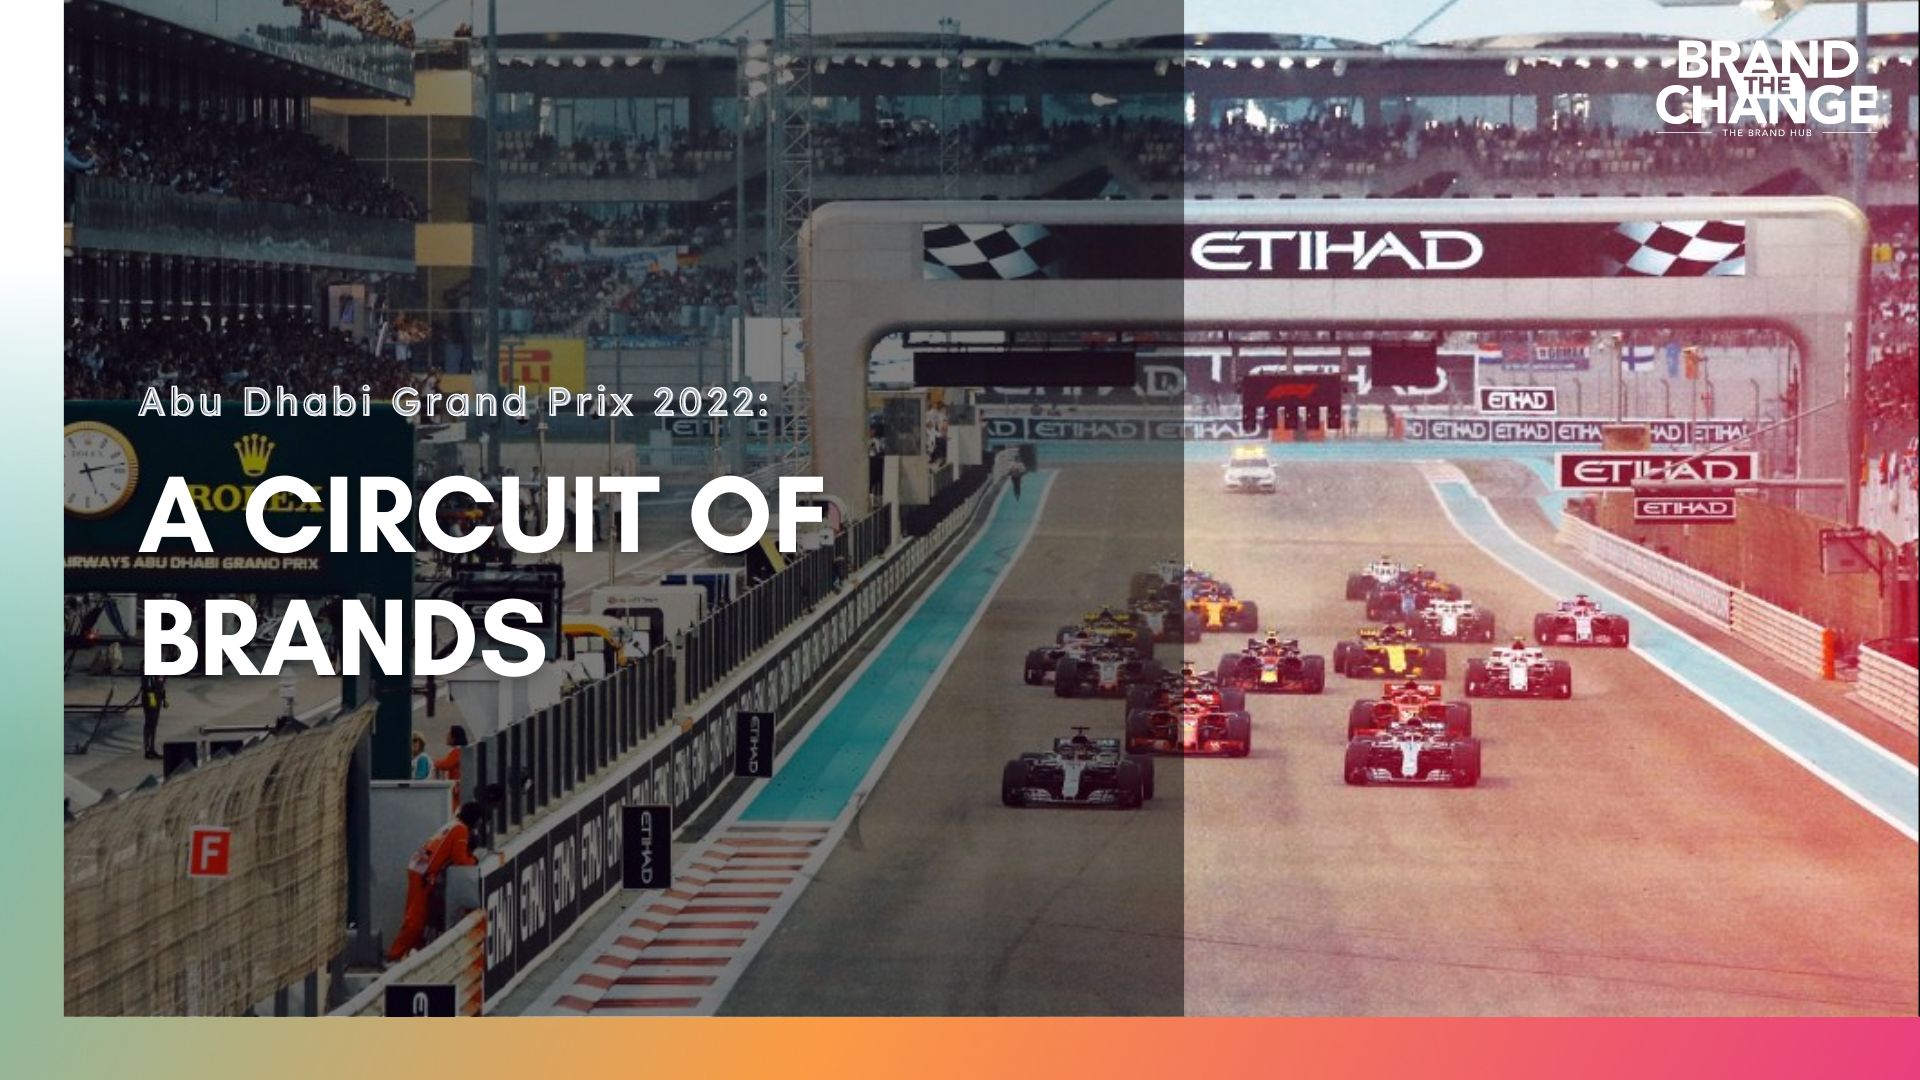 Abu Dhabi Grand Prix 2022 A Circuit of Brands Brand the Change